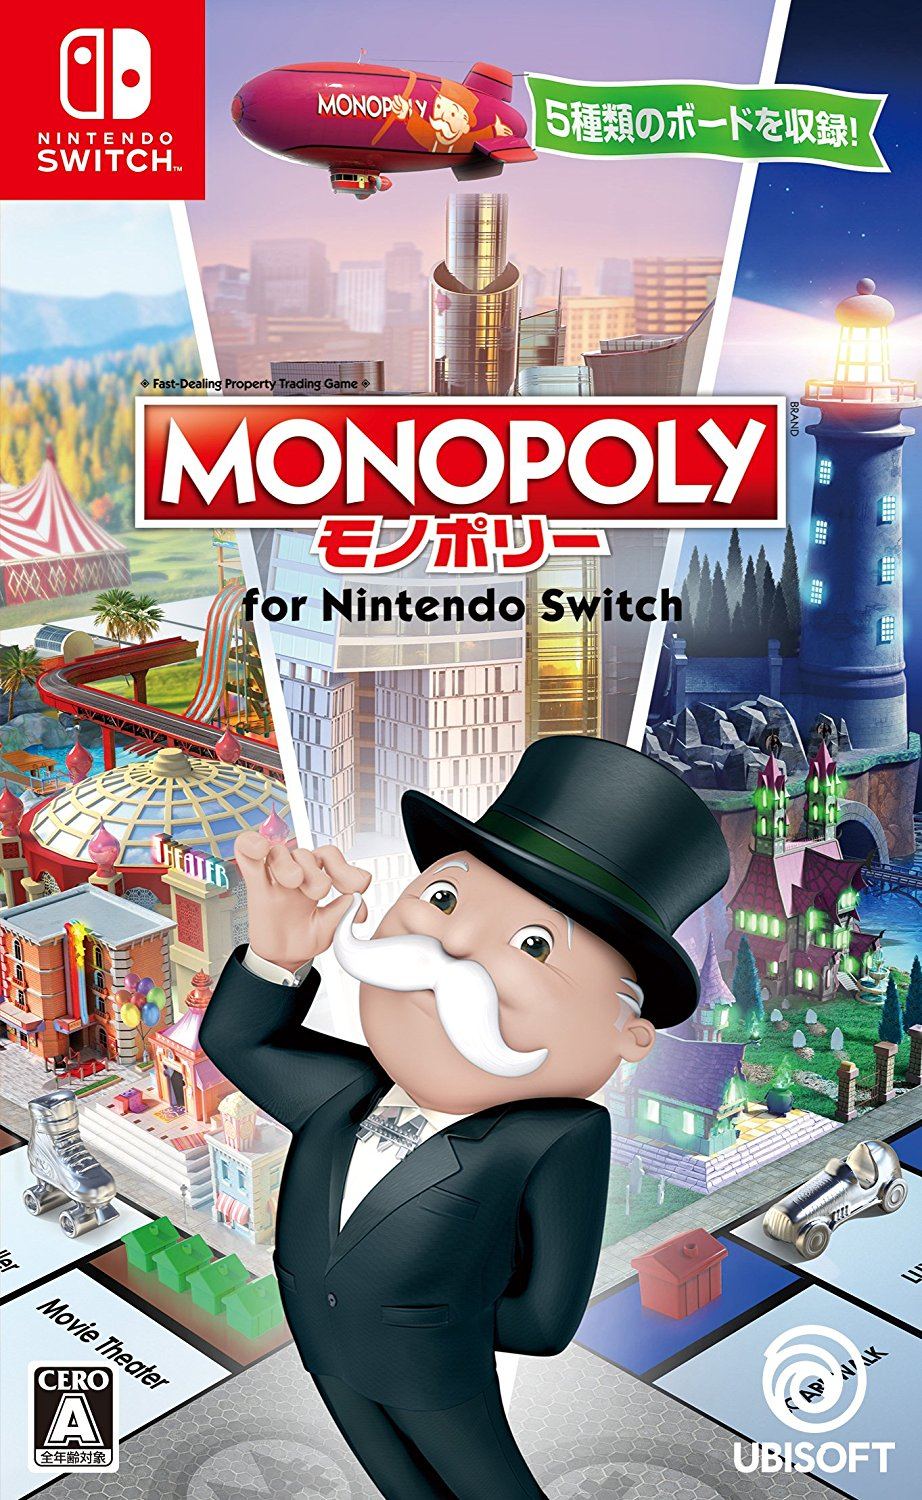 MONOPOLY® for Nintendo Switch™ for Nintendo Switch - Nintendo